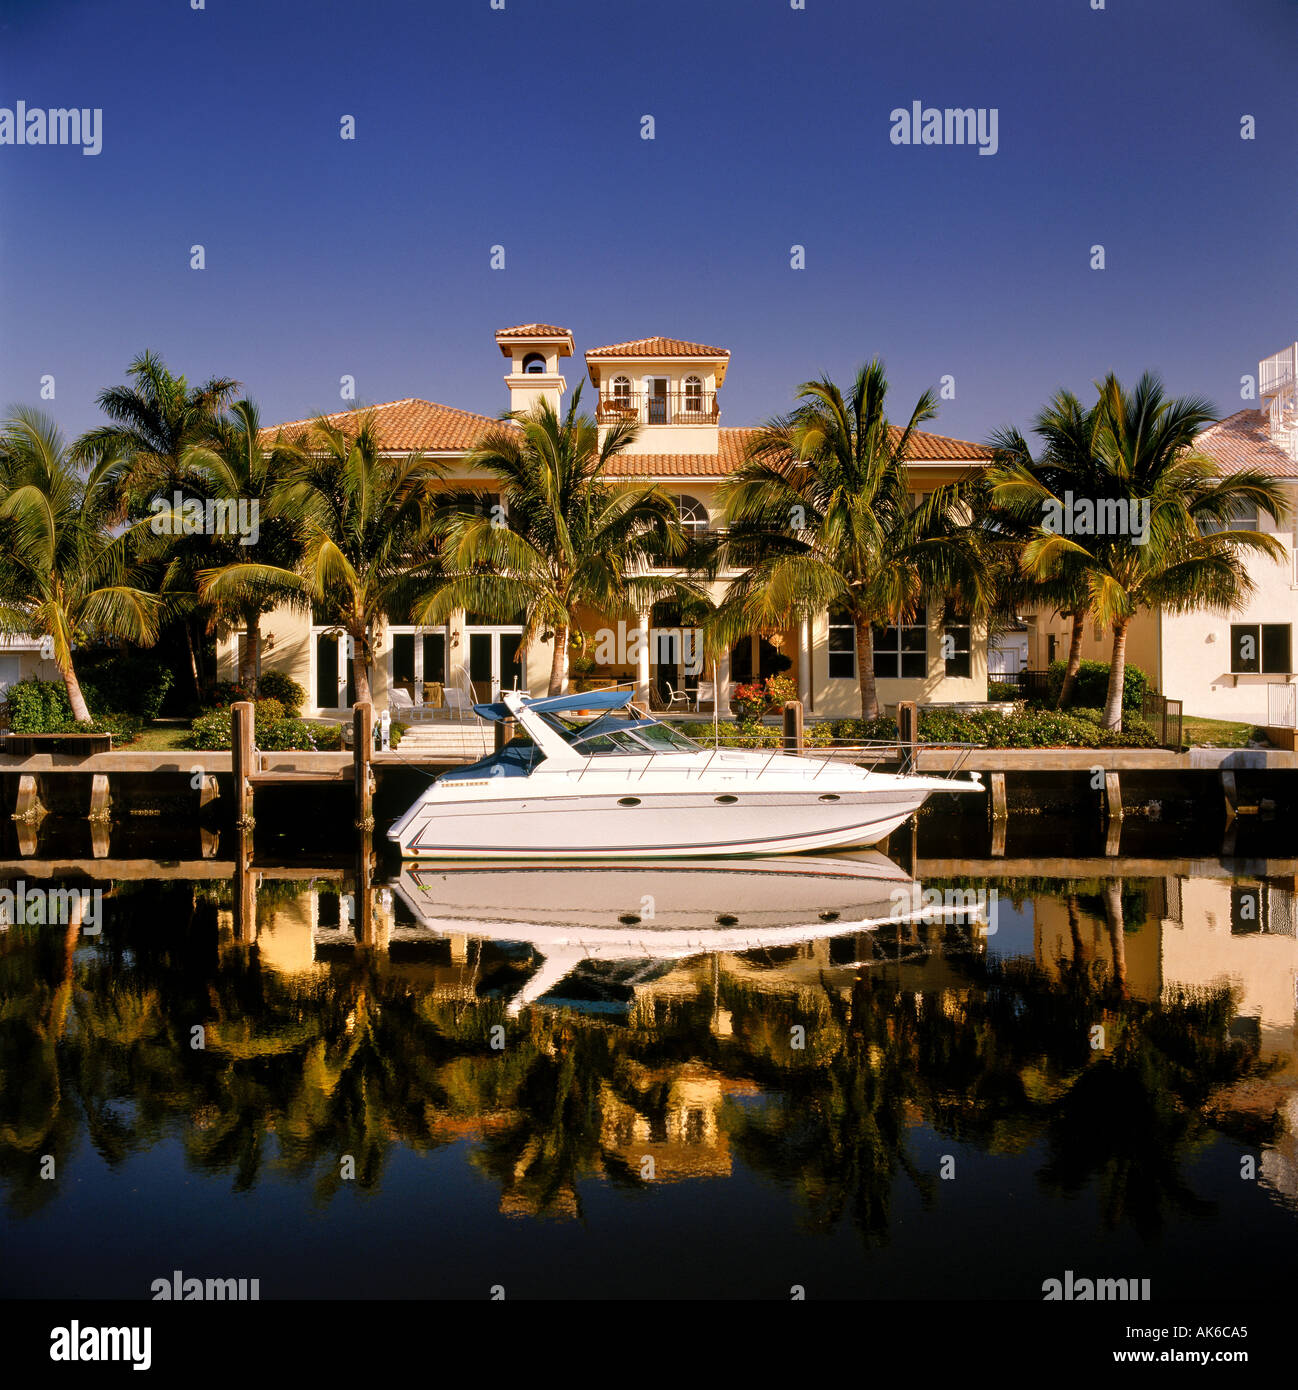 Florida intracoastal home with yacht Stock Photo